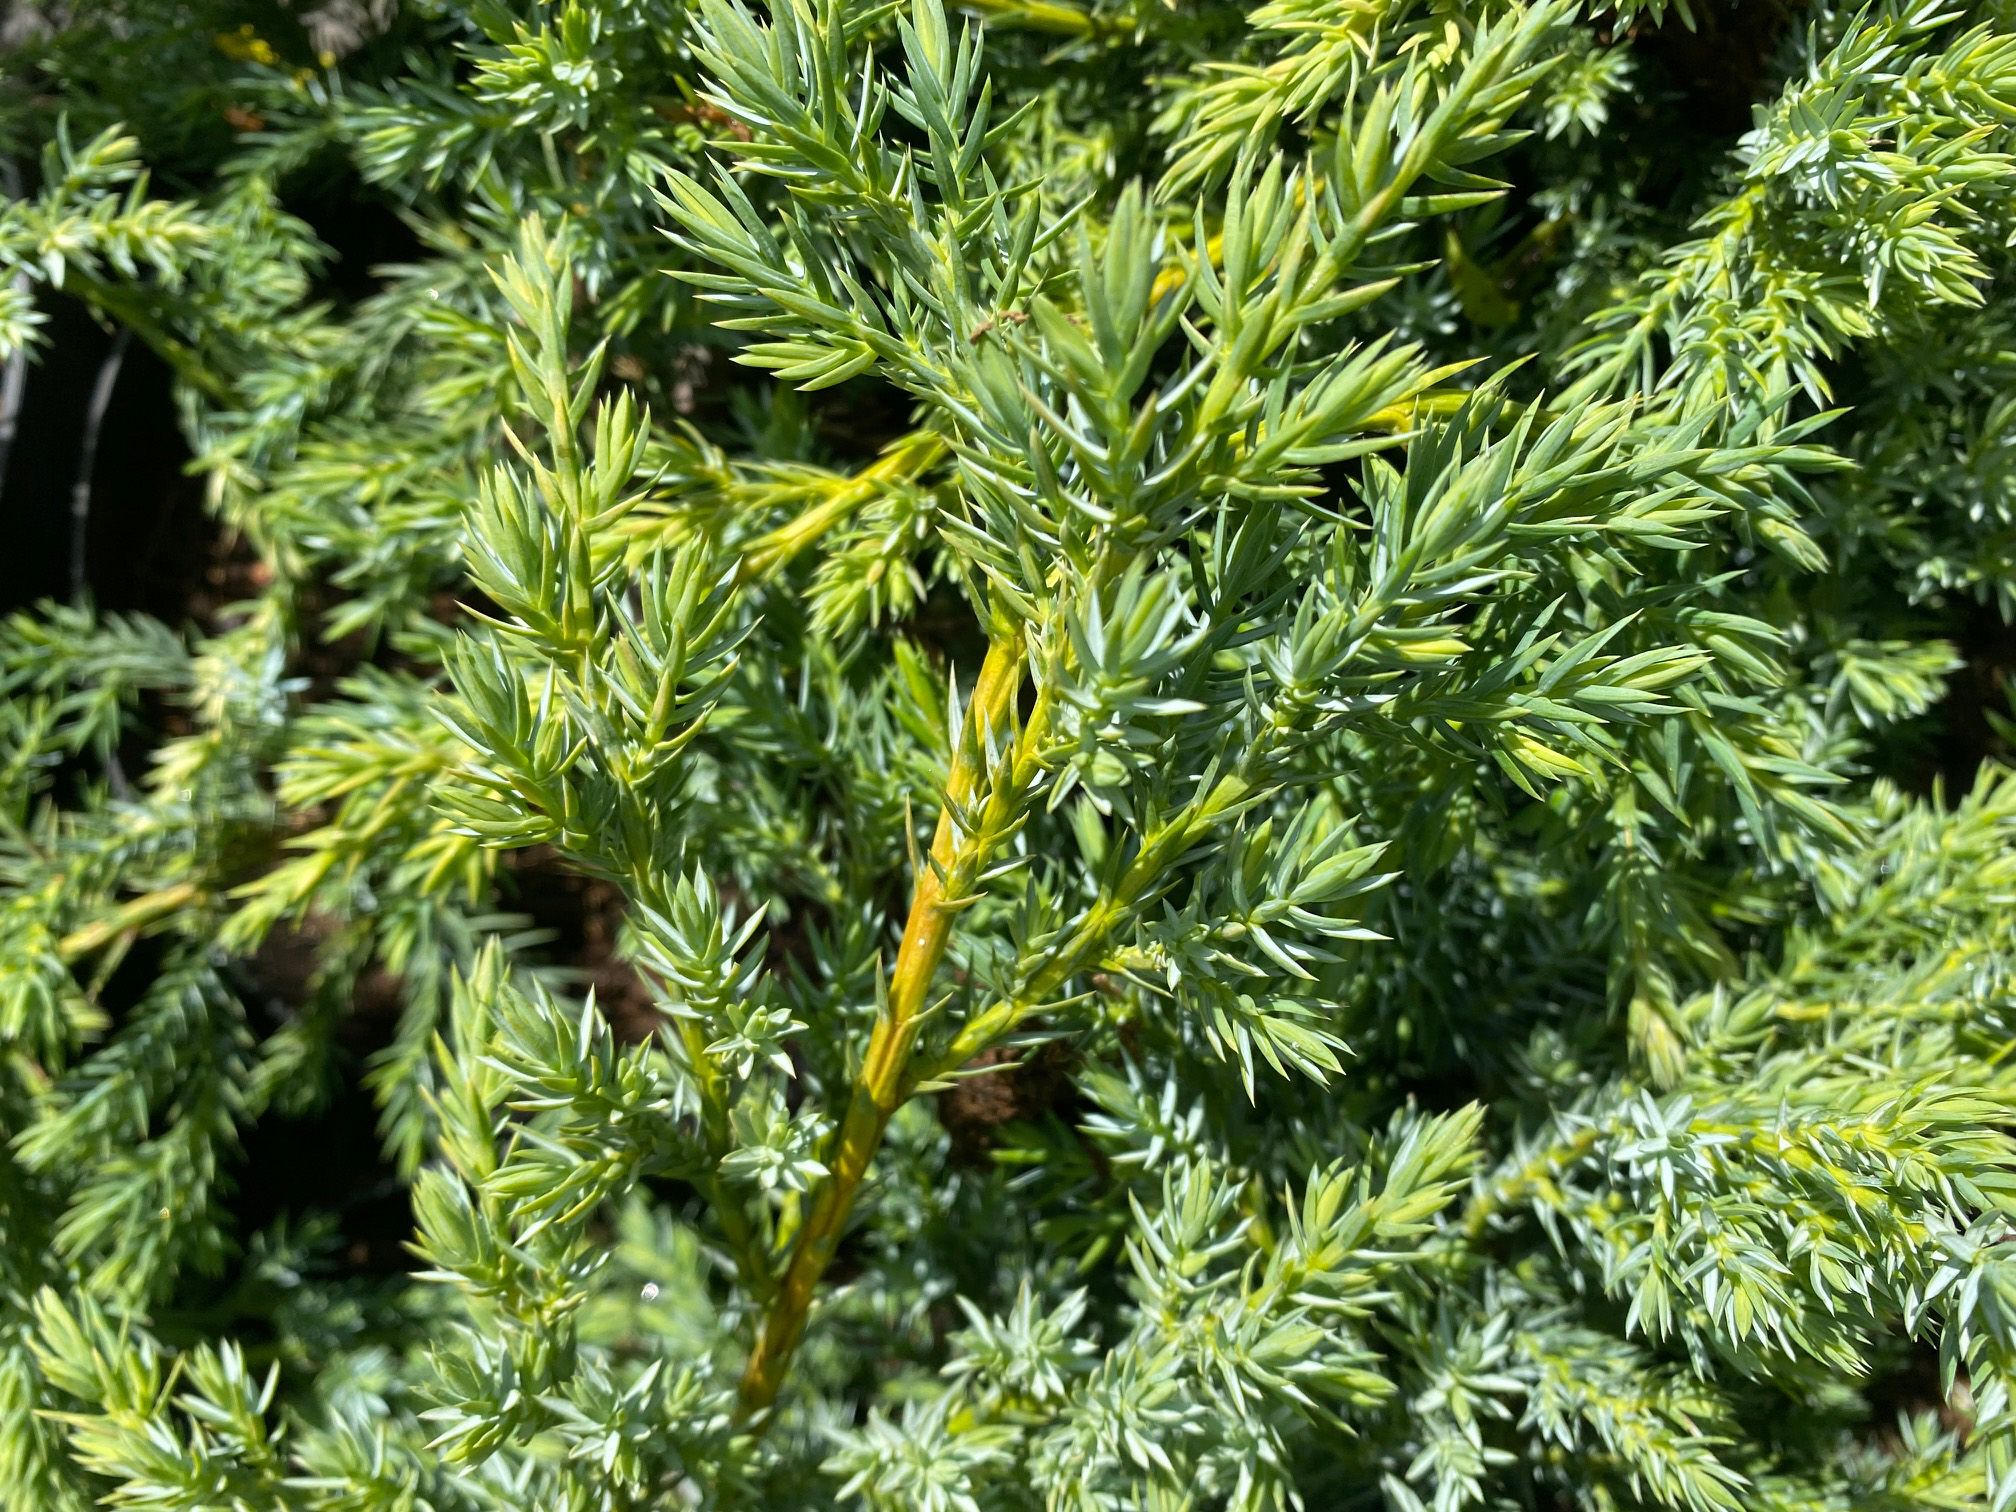 Jeneverbes - Juniperus squamata 'Blue Carpet'